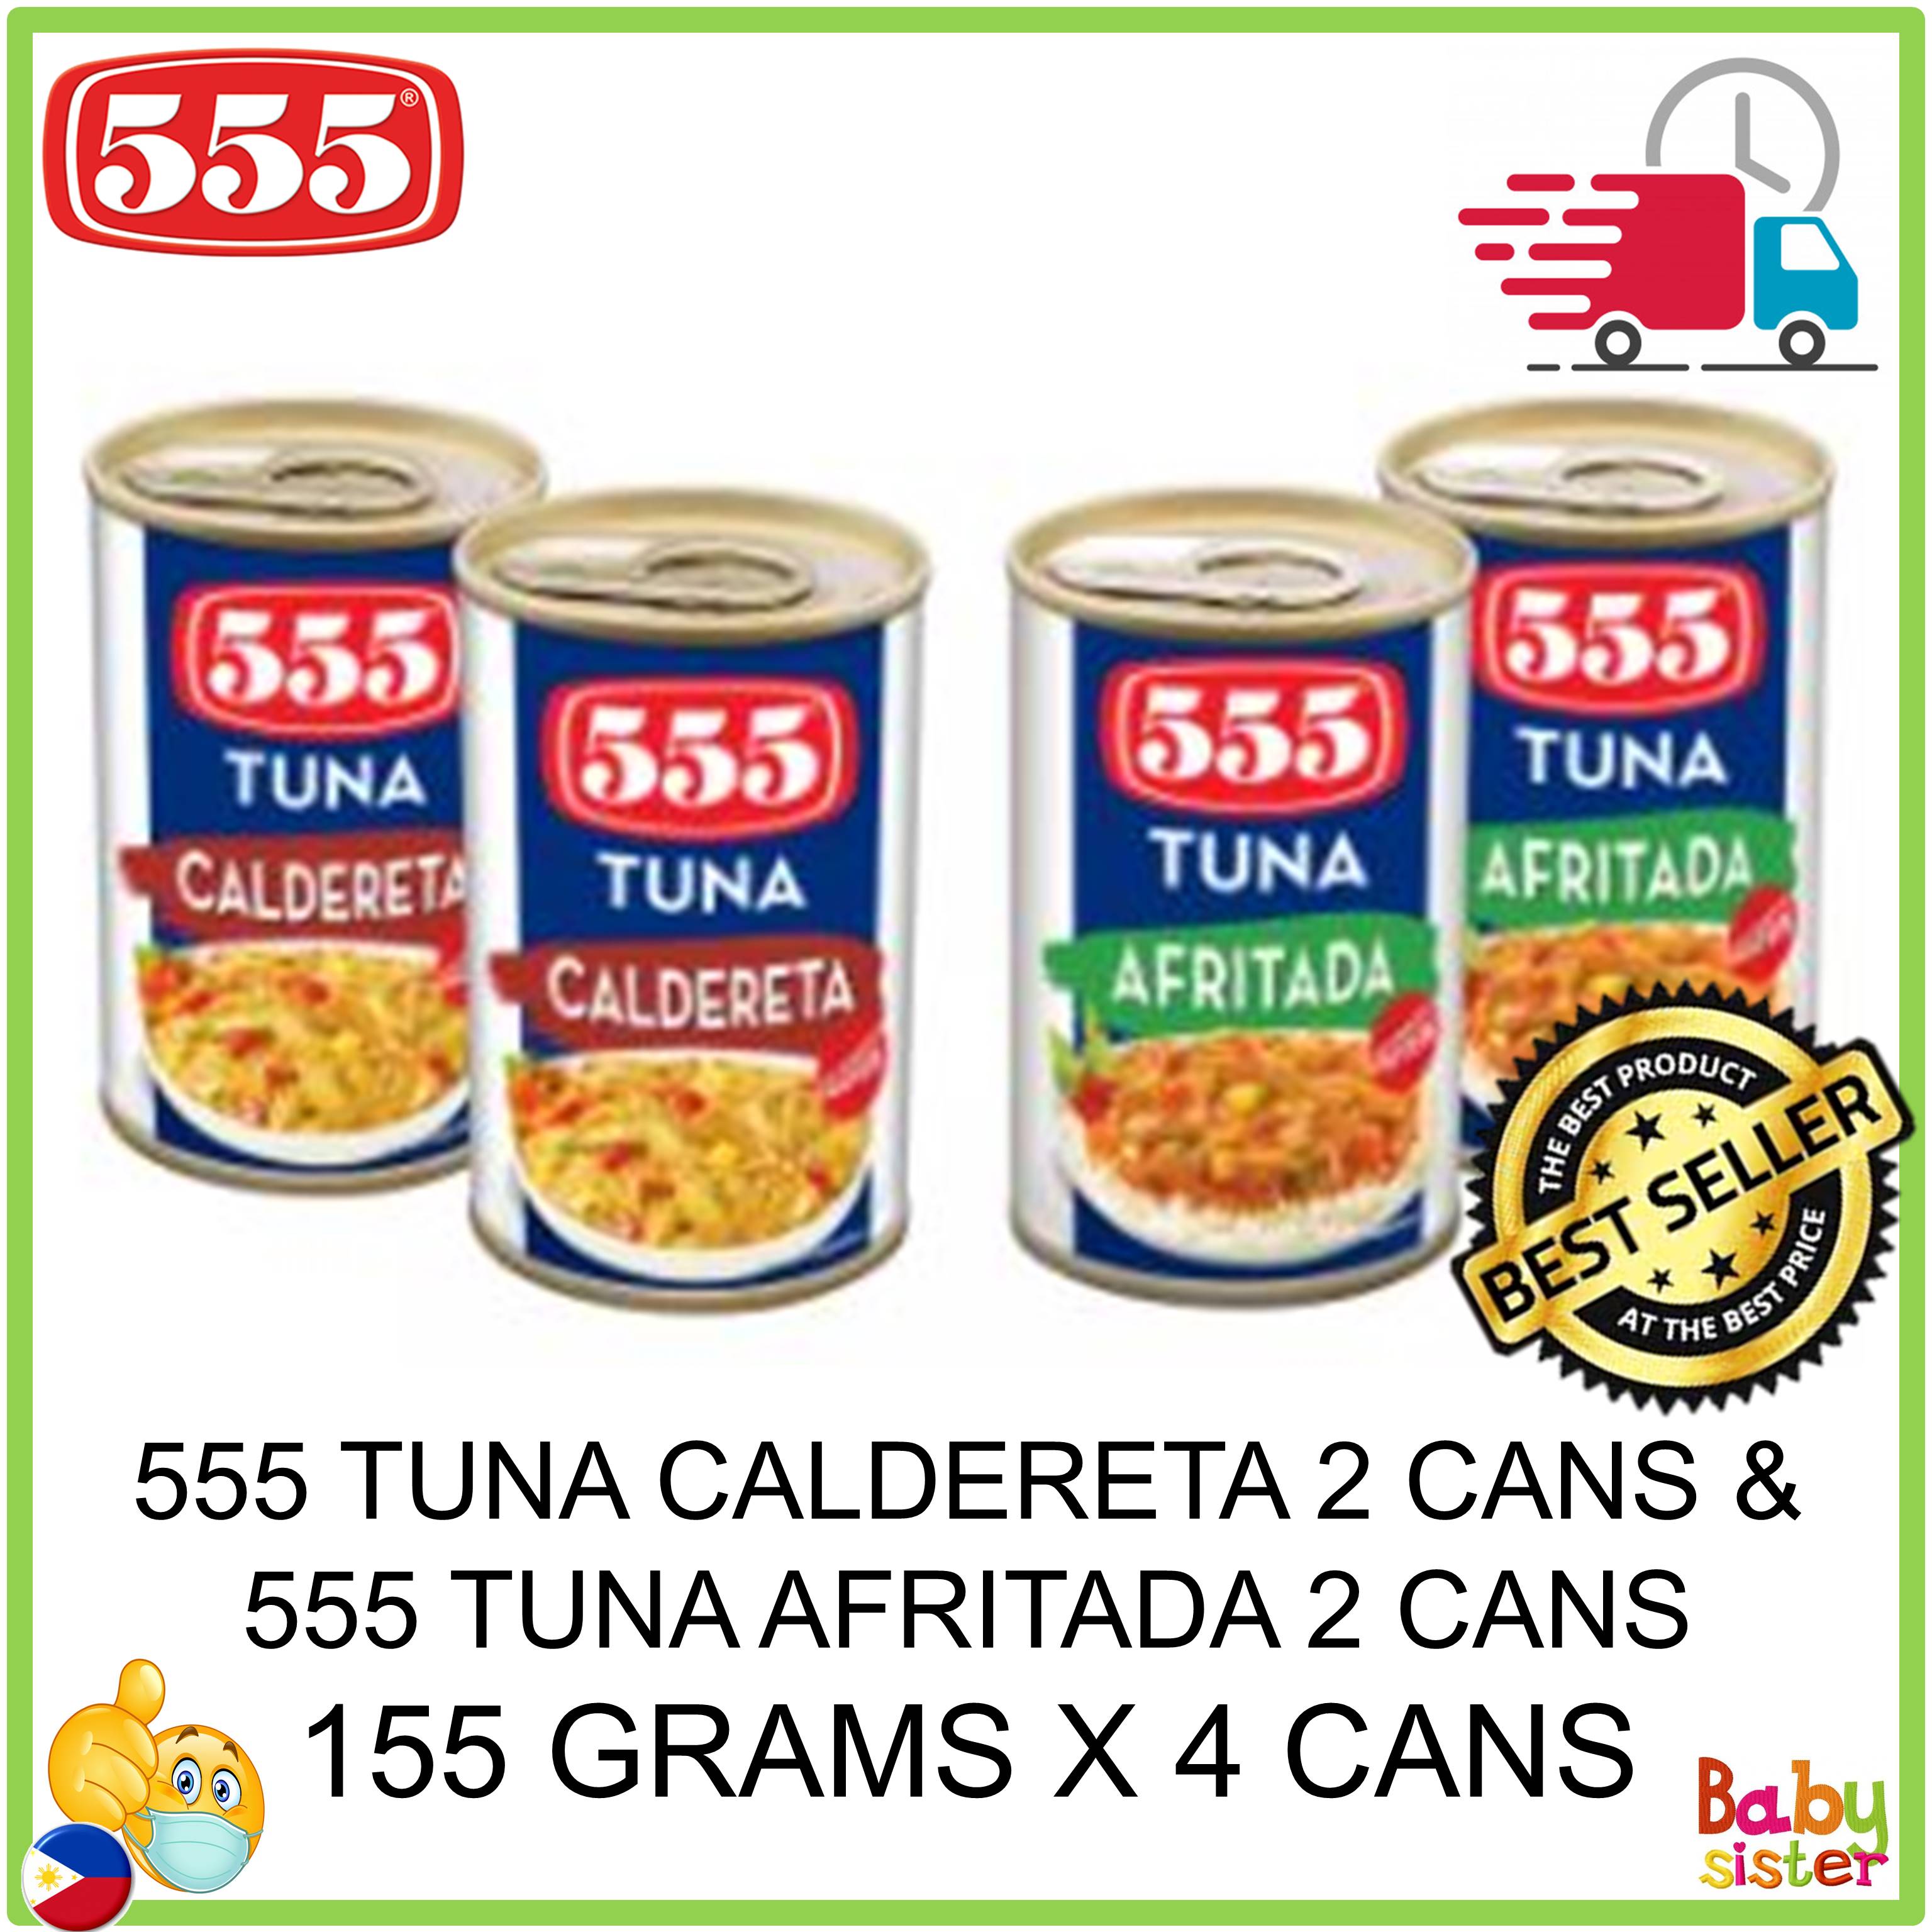 555 Tuna Afritada 155 Grams X 2 Cans And 555 Tuna Caldereta 155 Grams X 